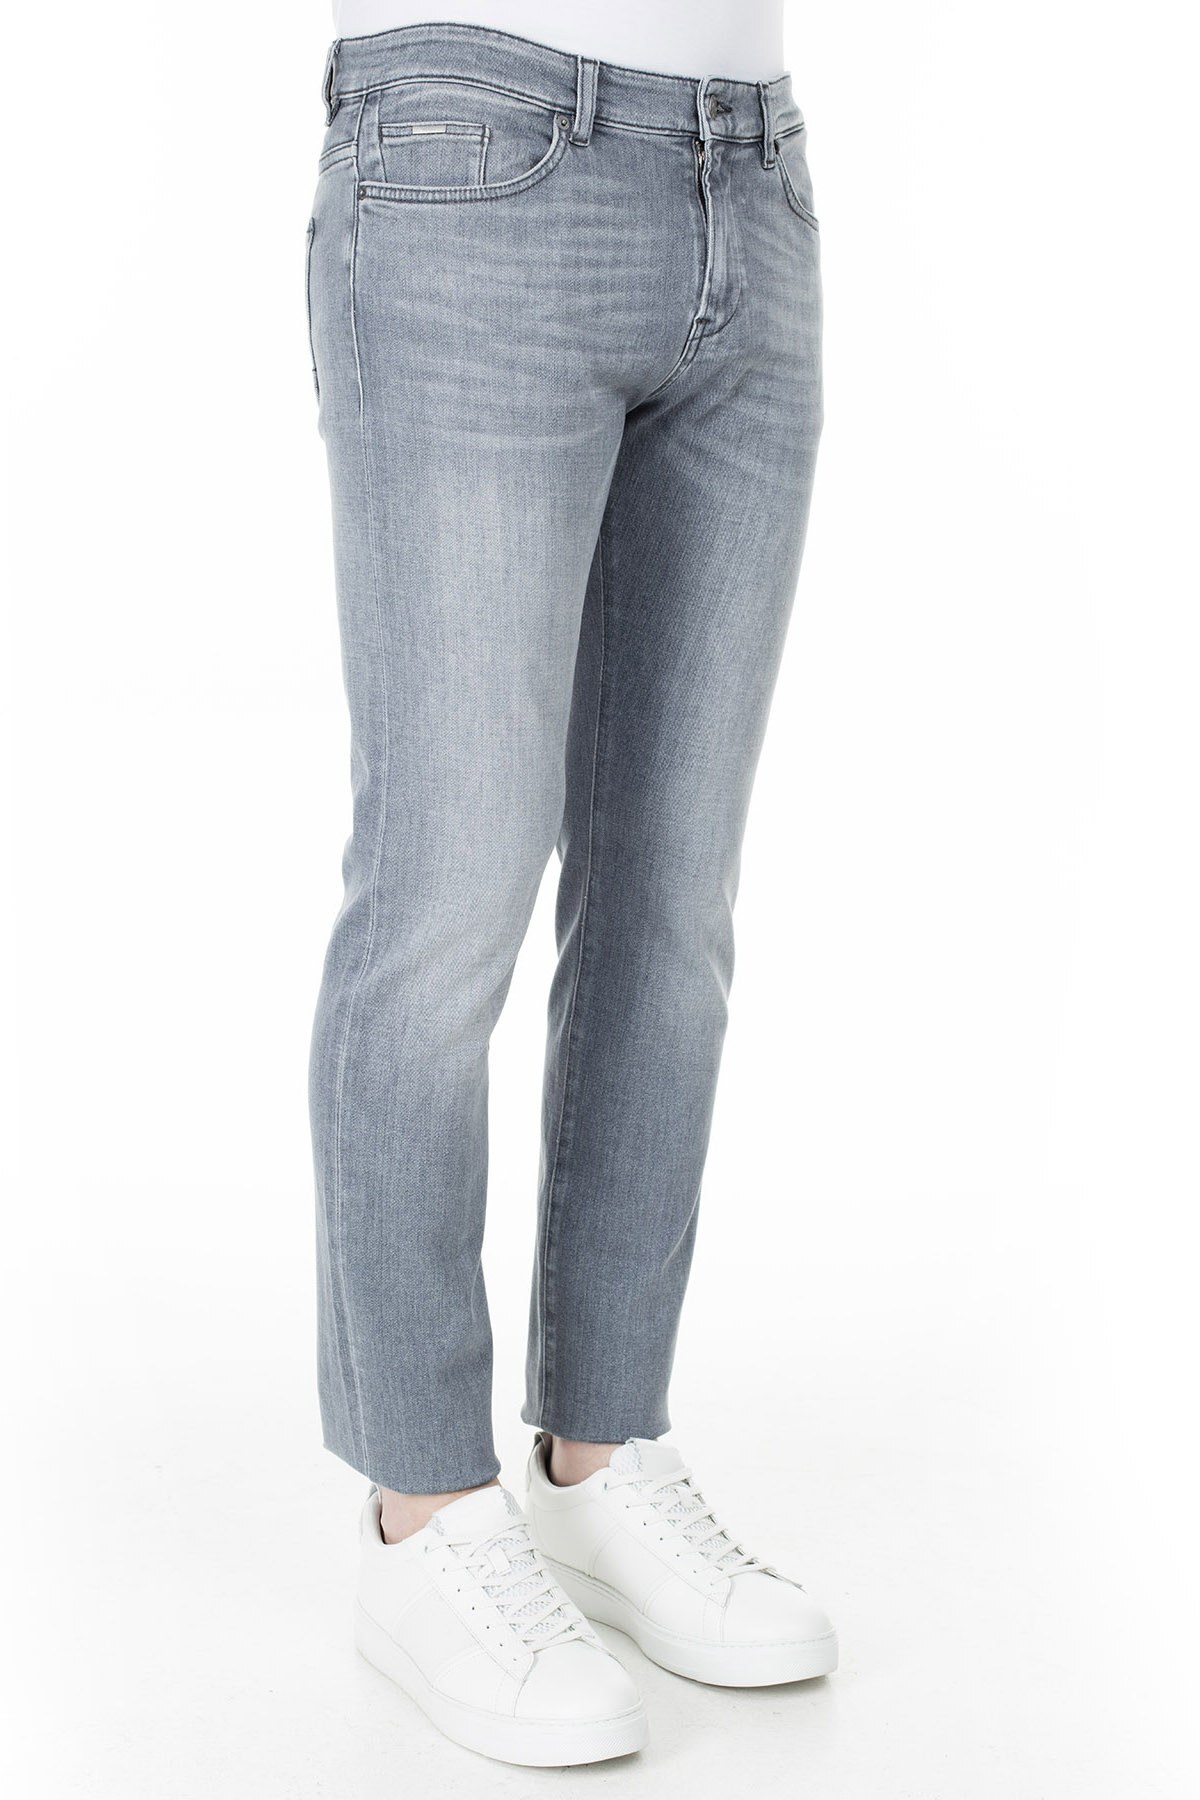 Hugo Boss Slim Fit Jeans Erkek Kot Pantolon 50426423 050 GRİ